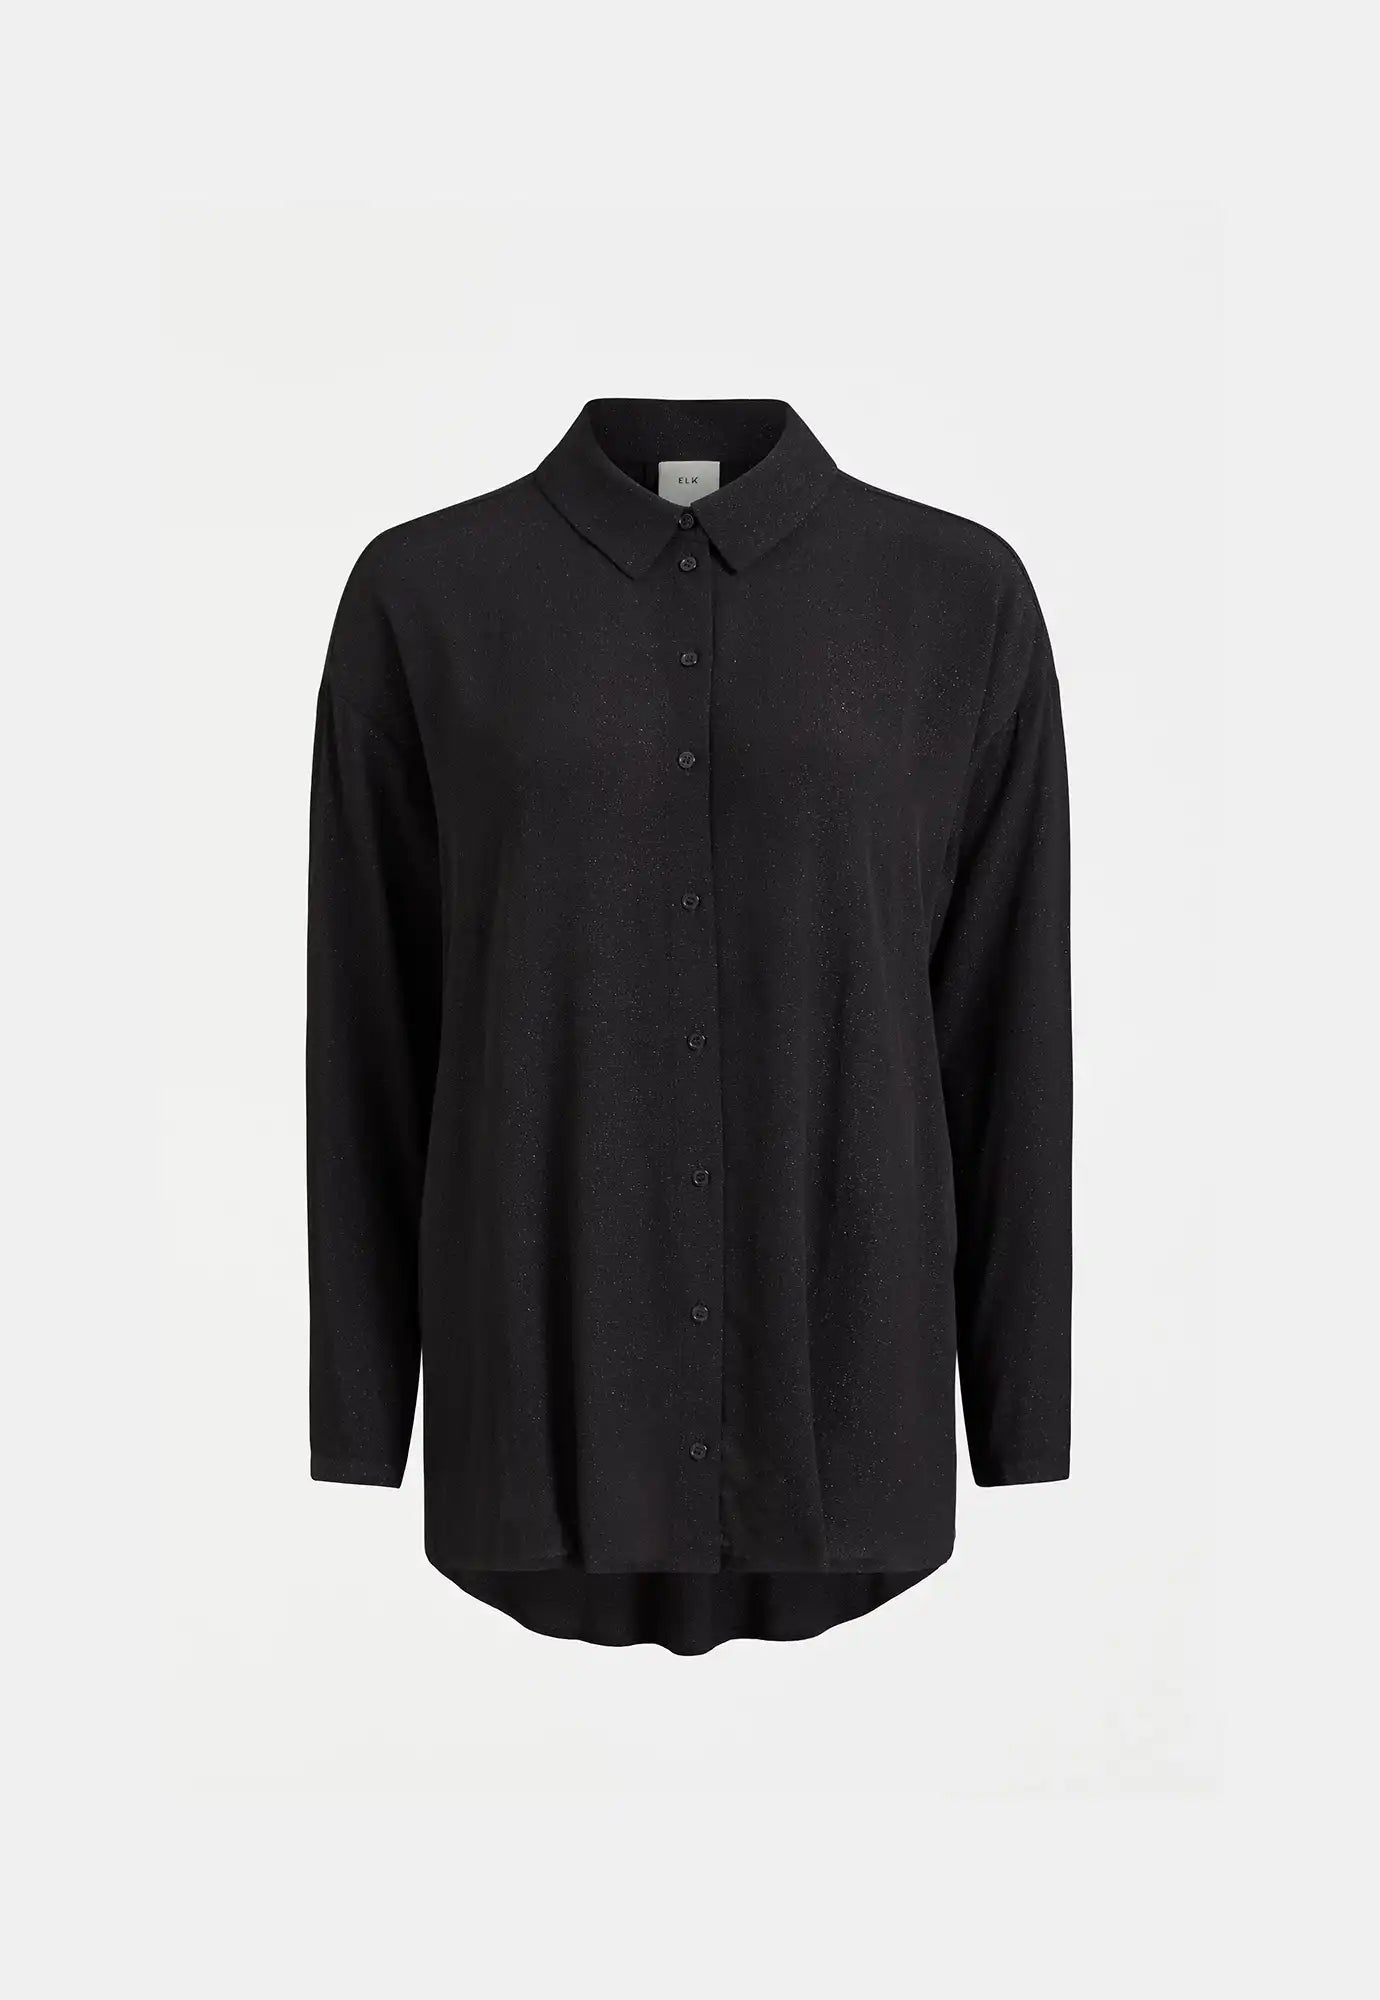 elk - blic sheer shirt - black metallic